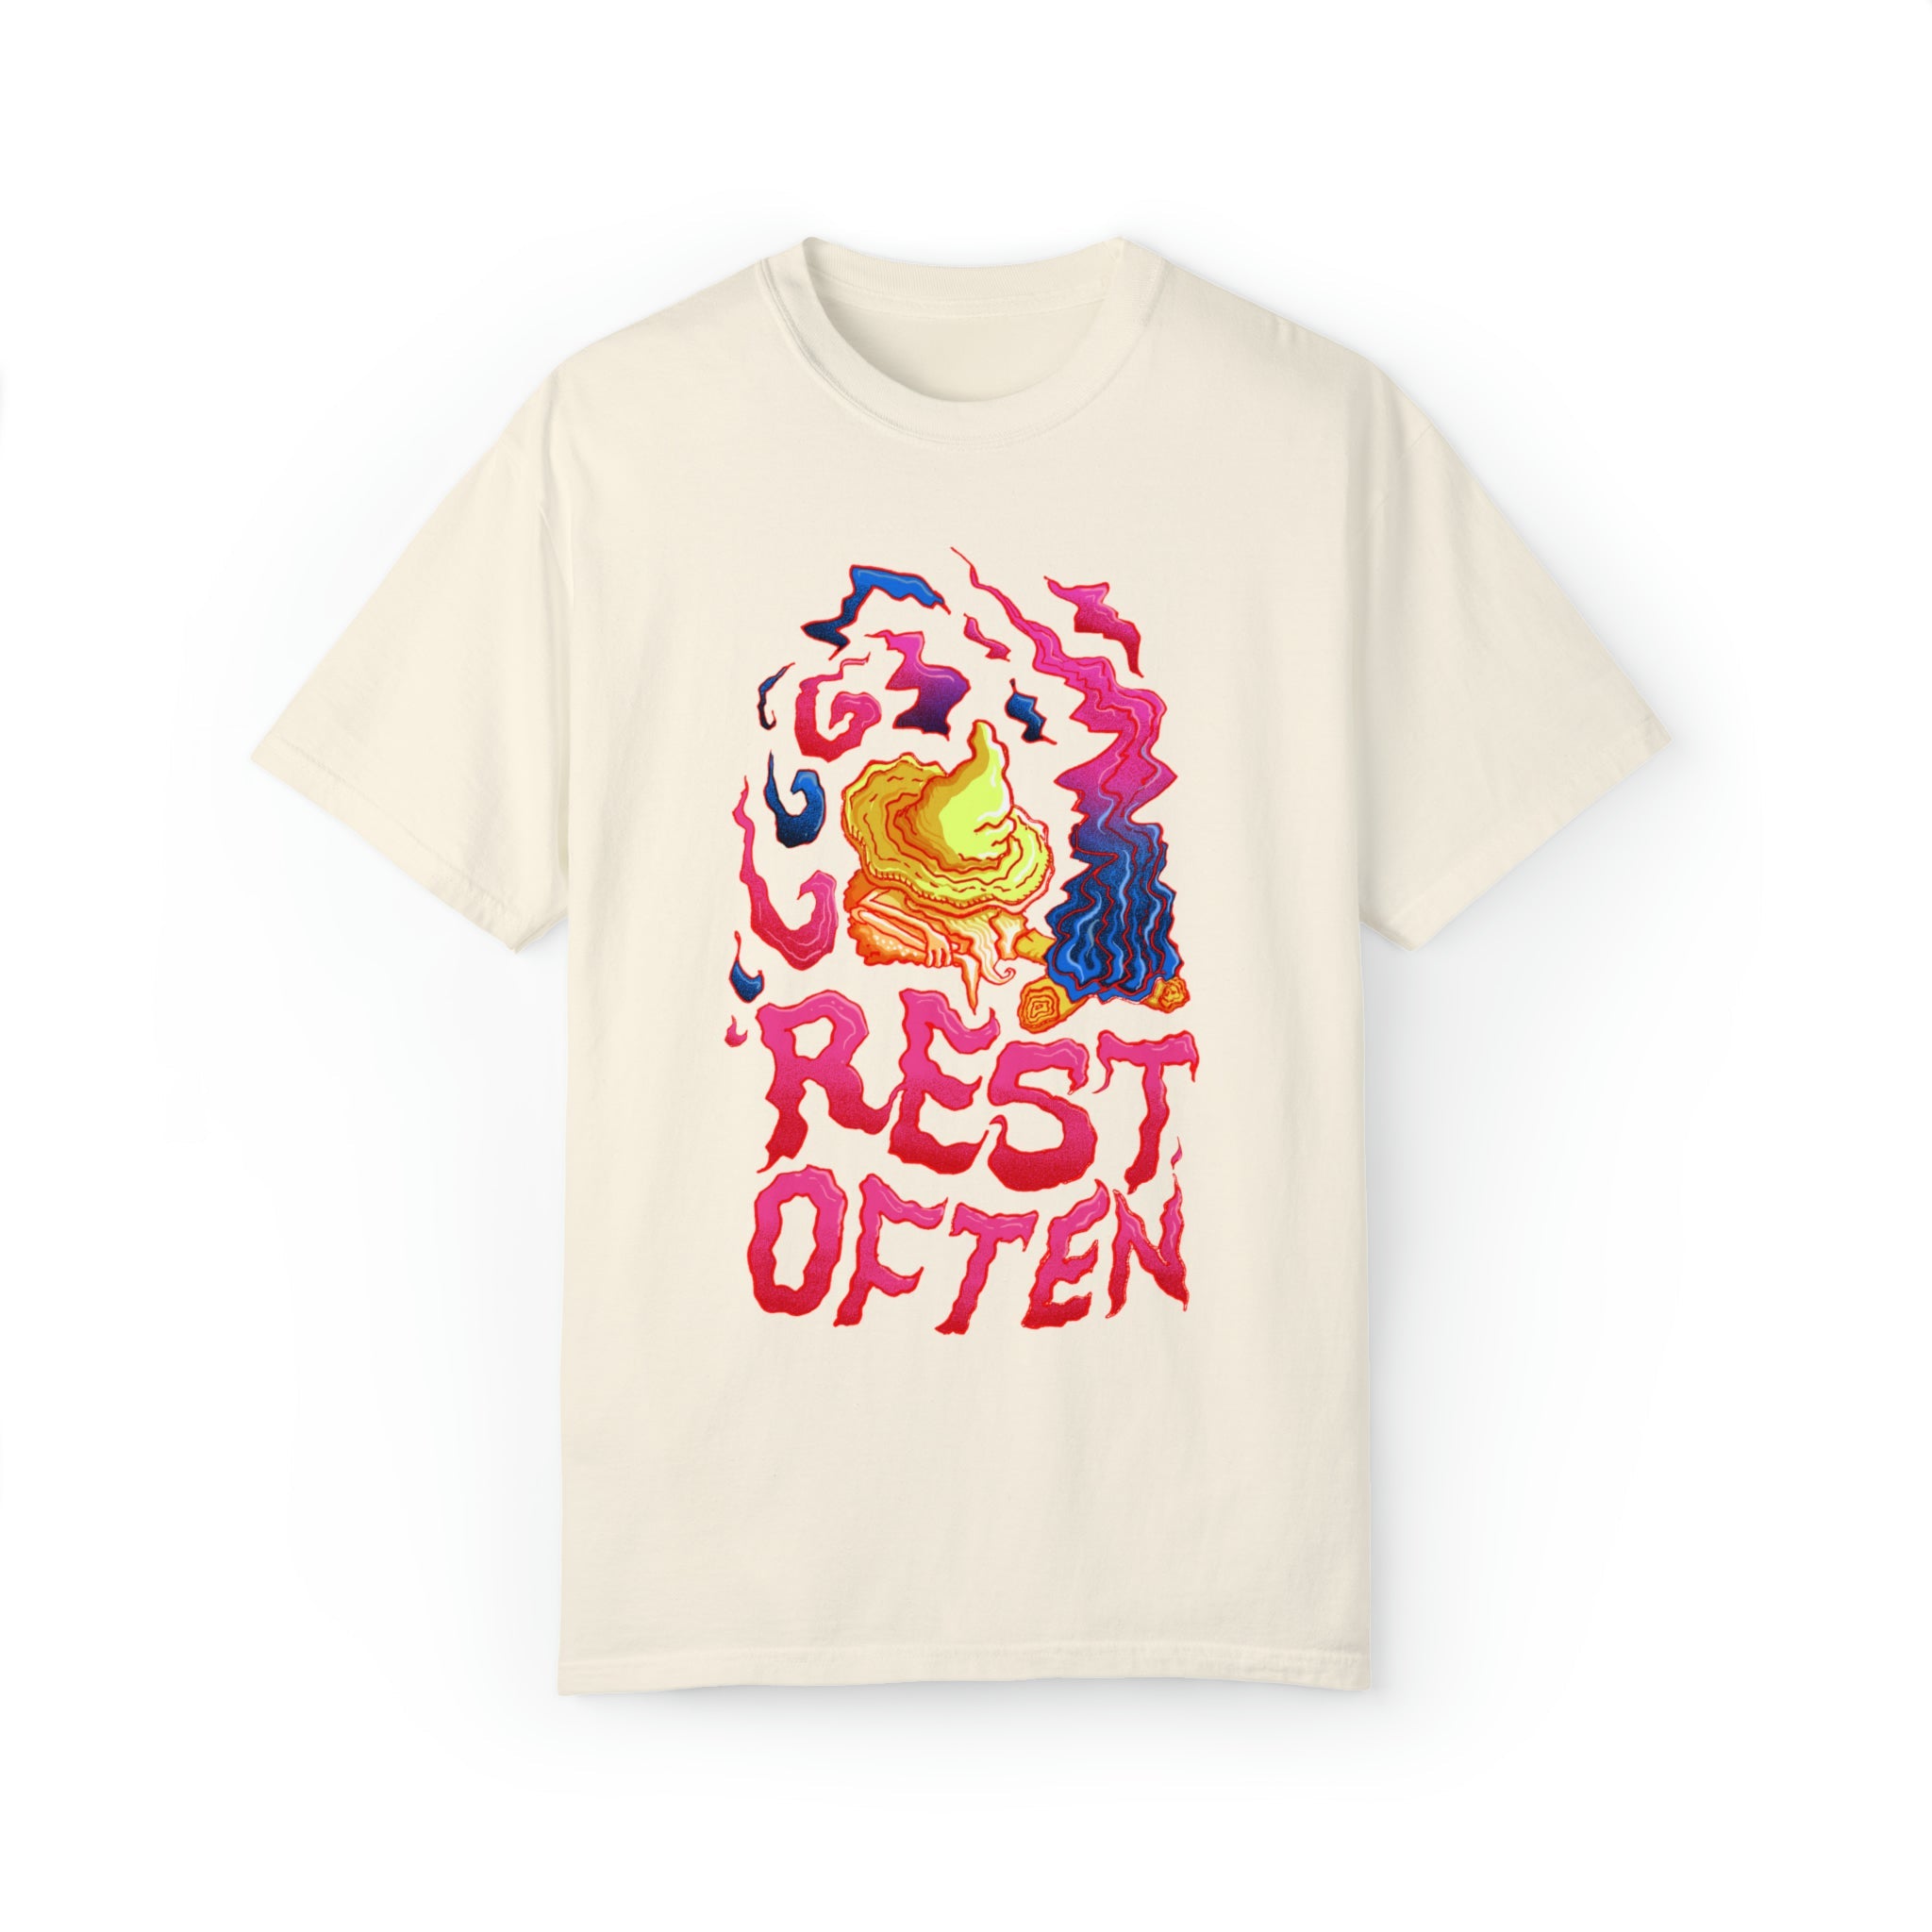 Rest Often | Comfort Colors T-shirt - T-Shirt - Ace of Gnomes - 21714450796708389683